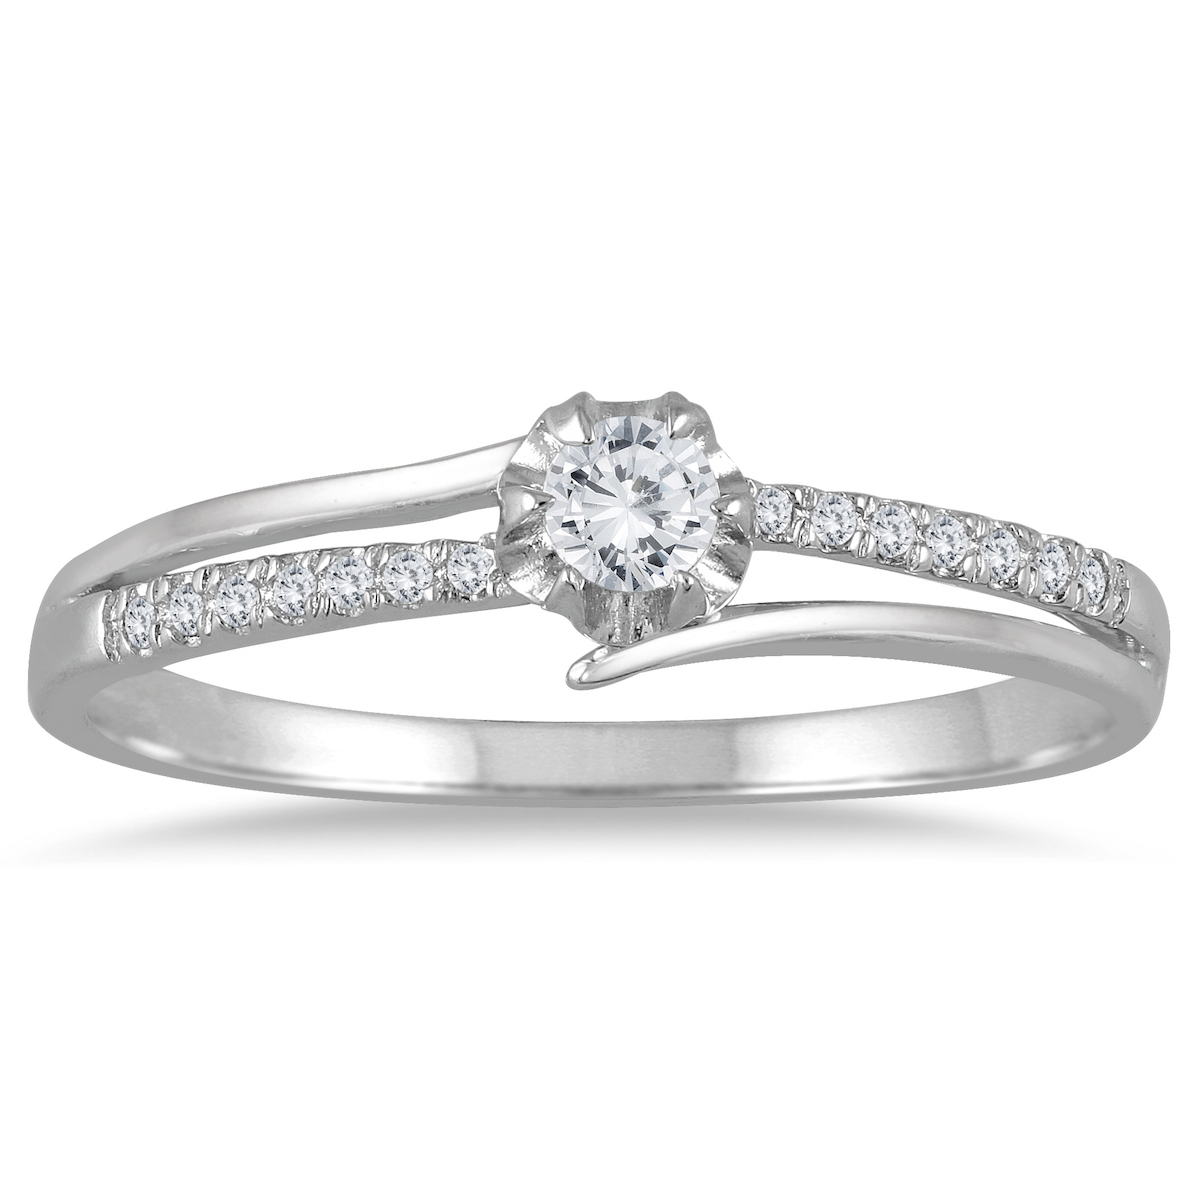 1/6 Carat TW Diamond Engagement Ring in 10K White Gold